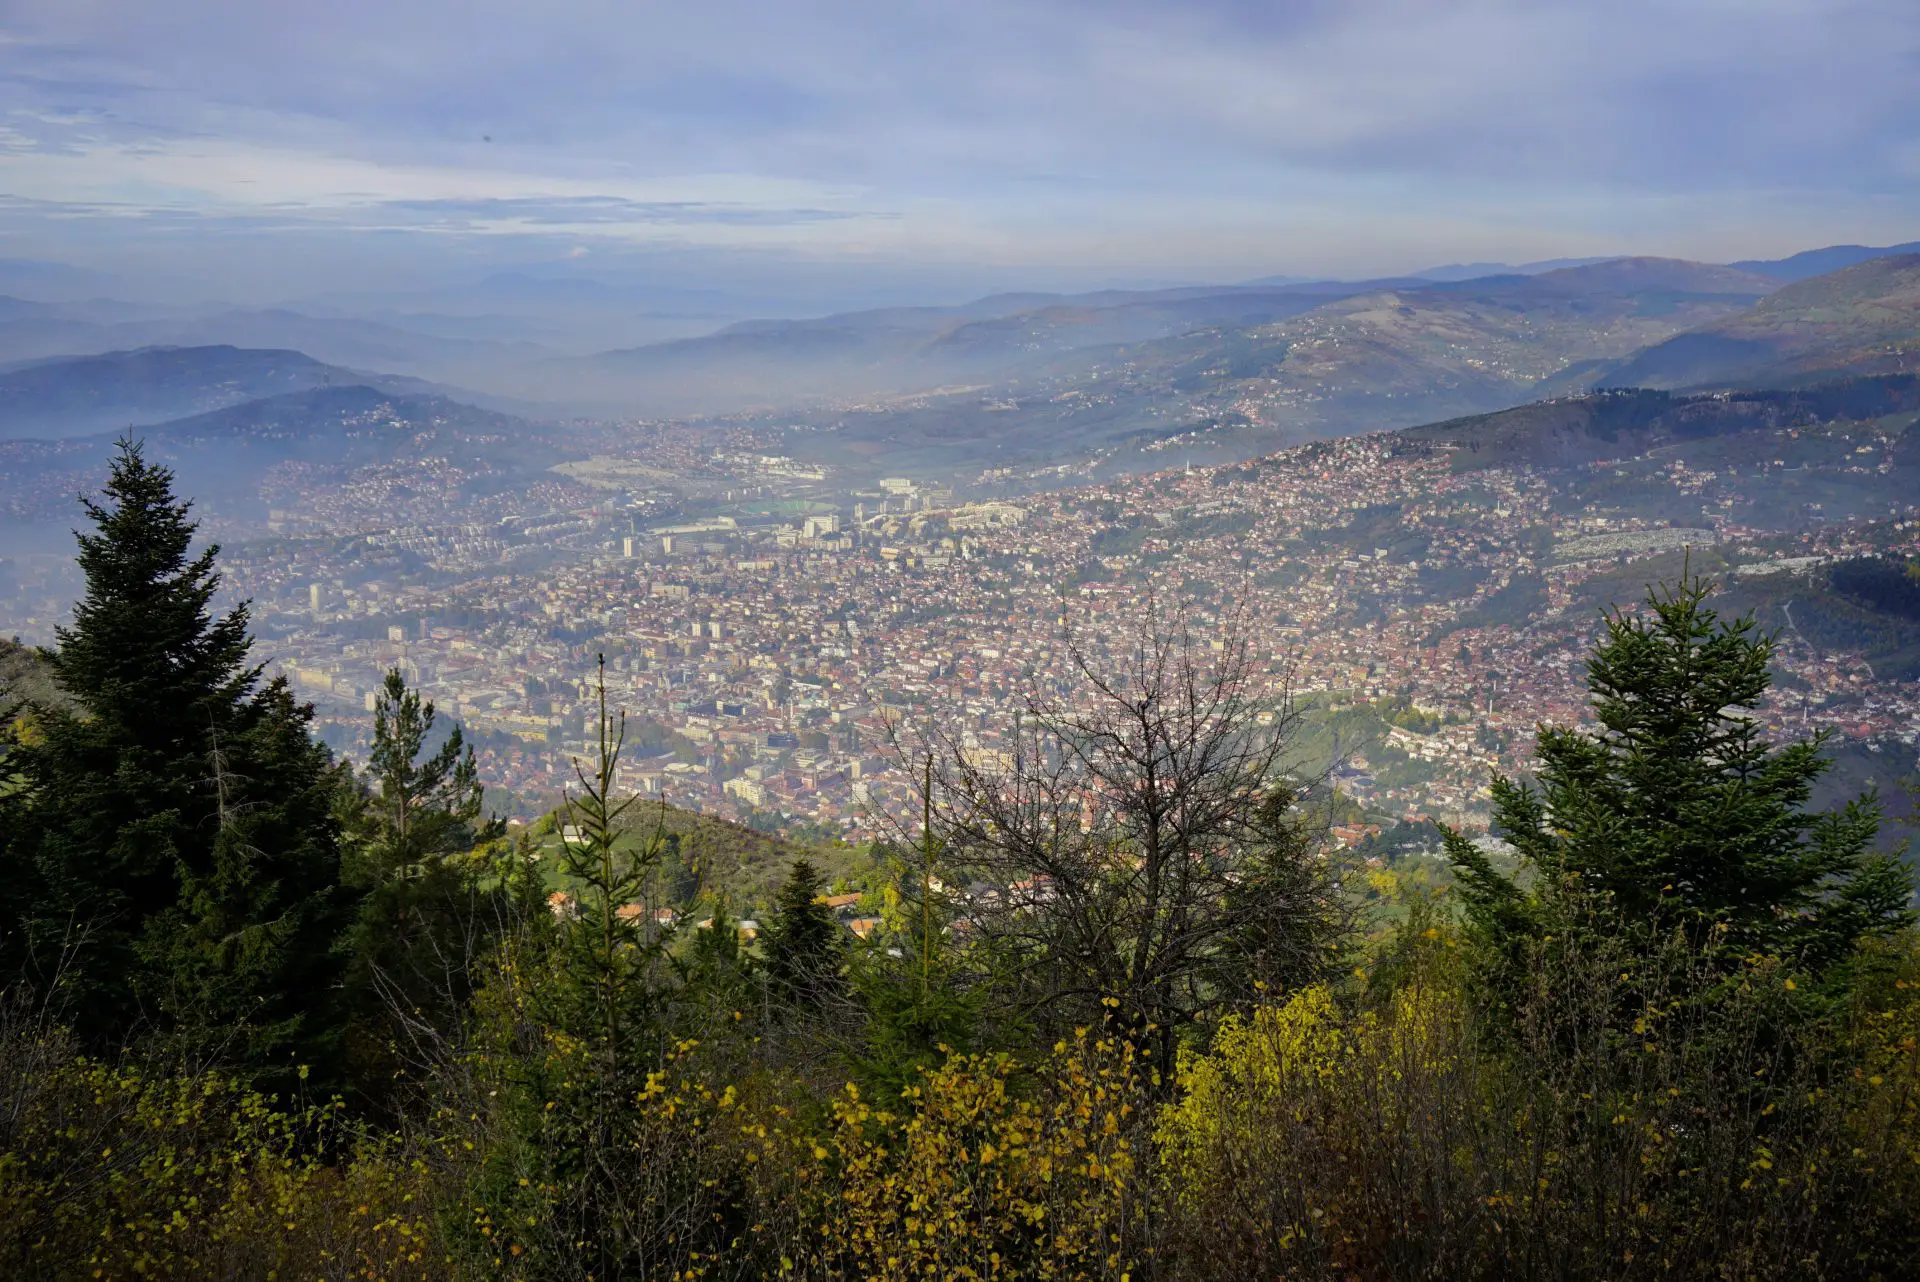 The city from above, Sarajevo, Bosnia and Herzegovina - Experiencing the Globe